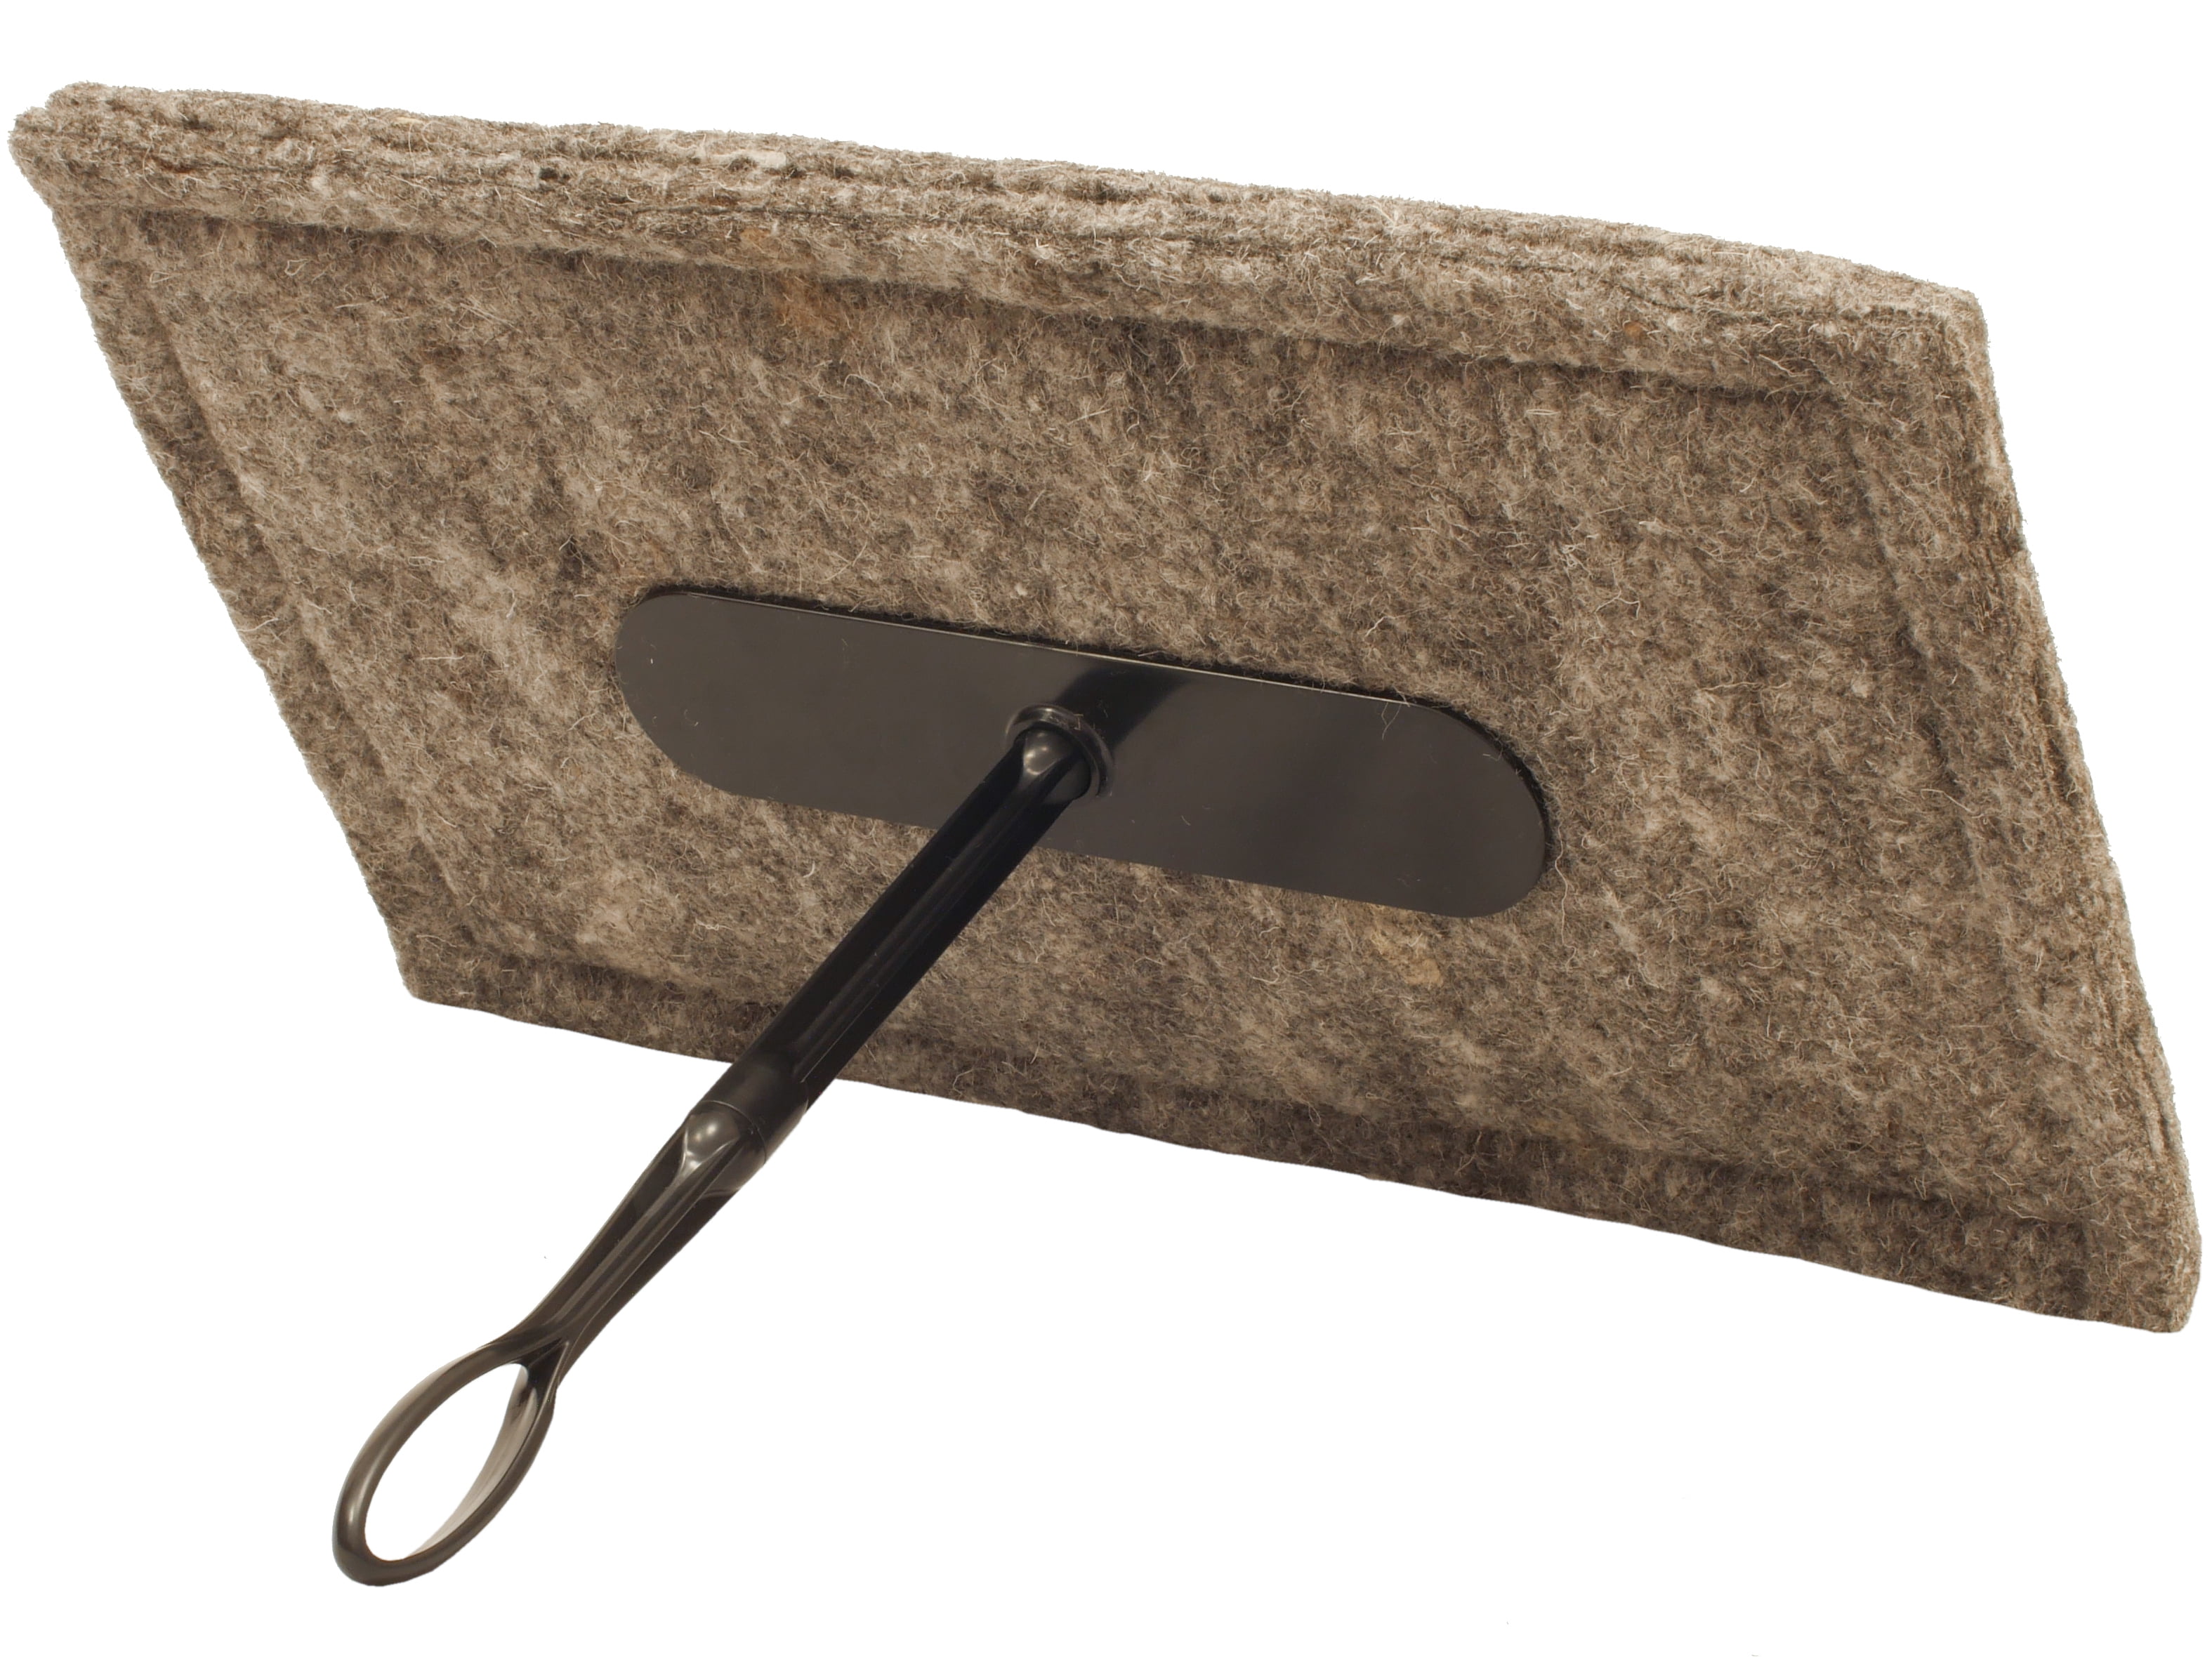 Flueblocker for 11X19 Wool Material Chimney Flue – Chimney Sheep  Fireplace Draft Stopper Plug Replacement Damper Fireplace Tool 